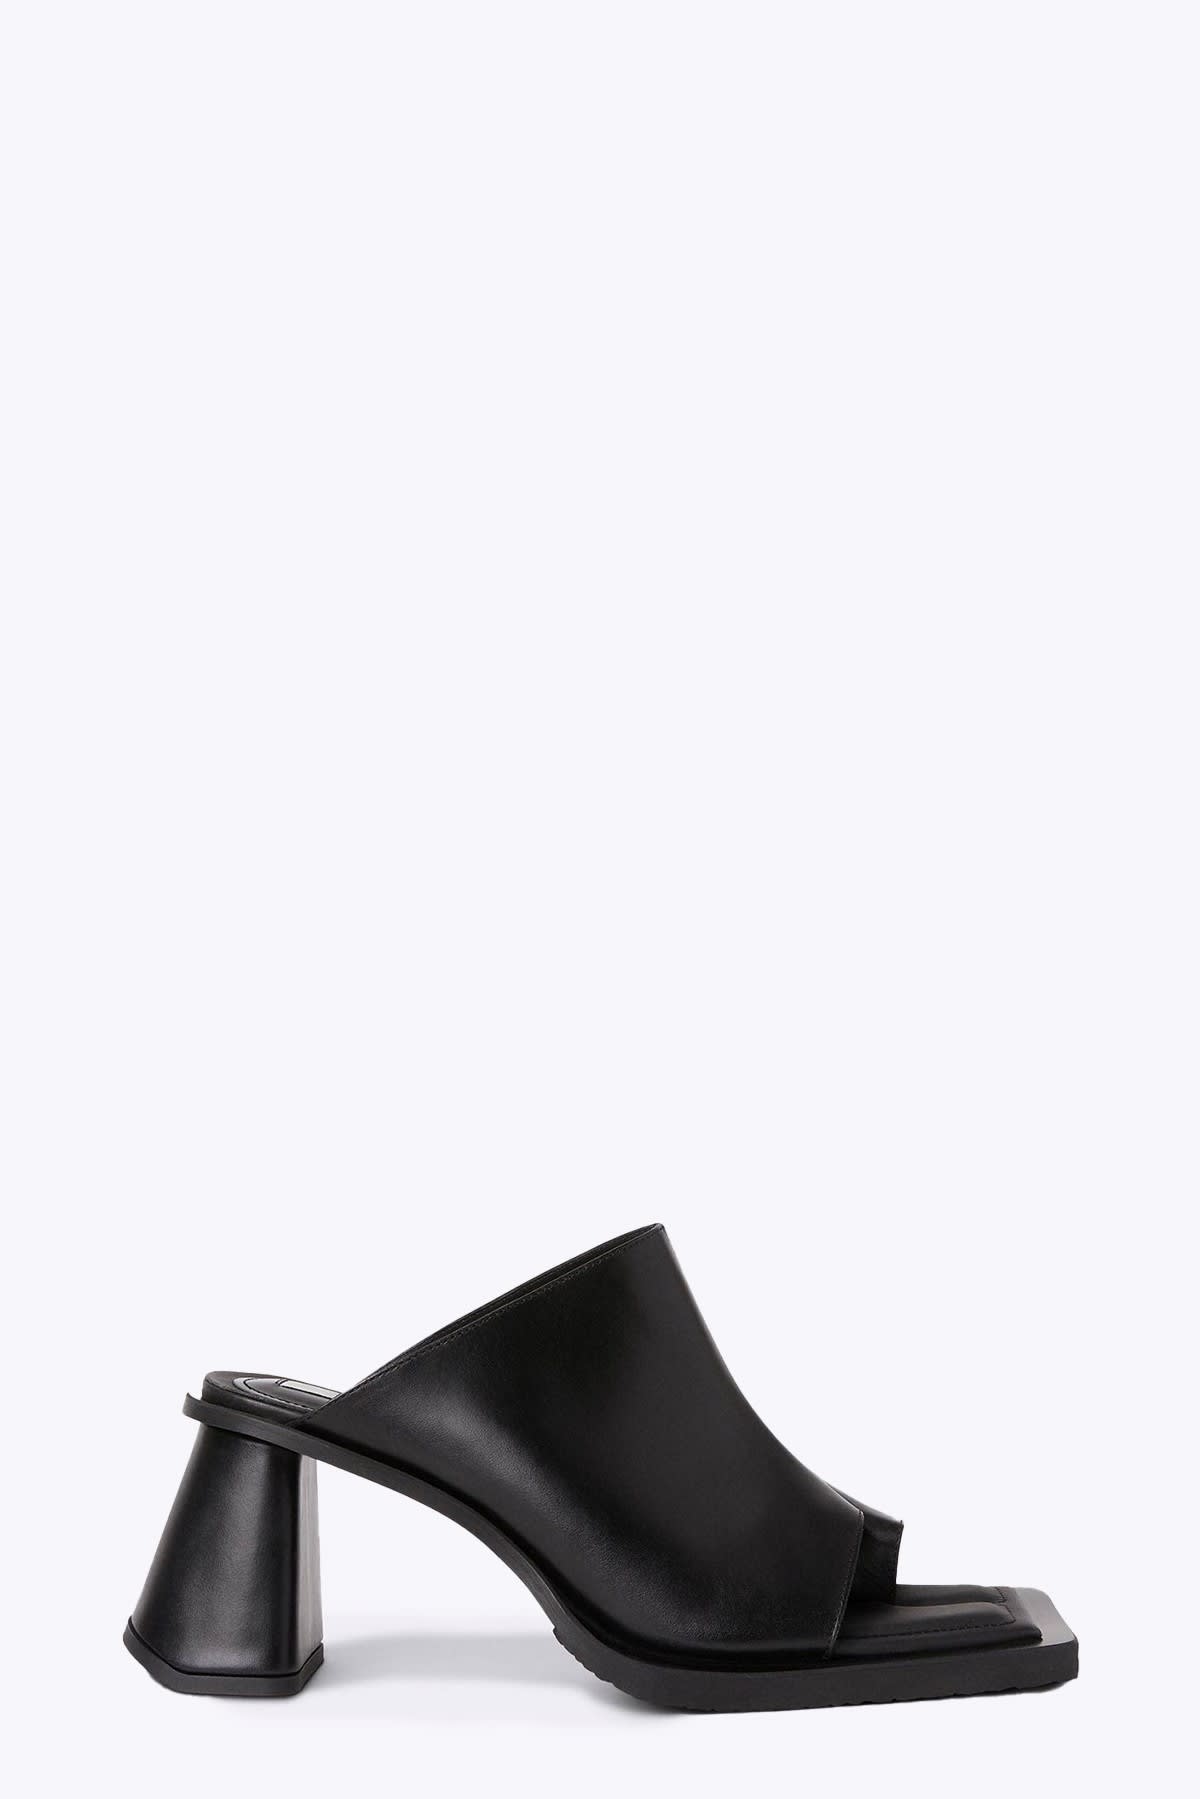 Eytys Naomi Black leather heeled mules - NAOMI